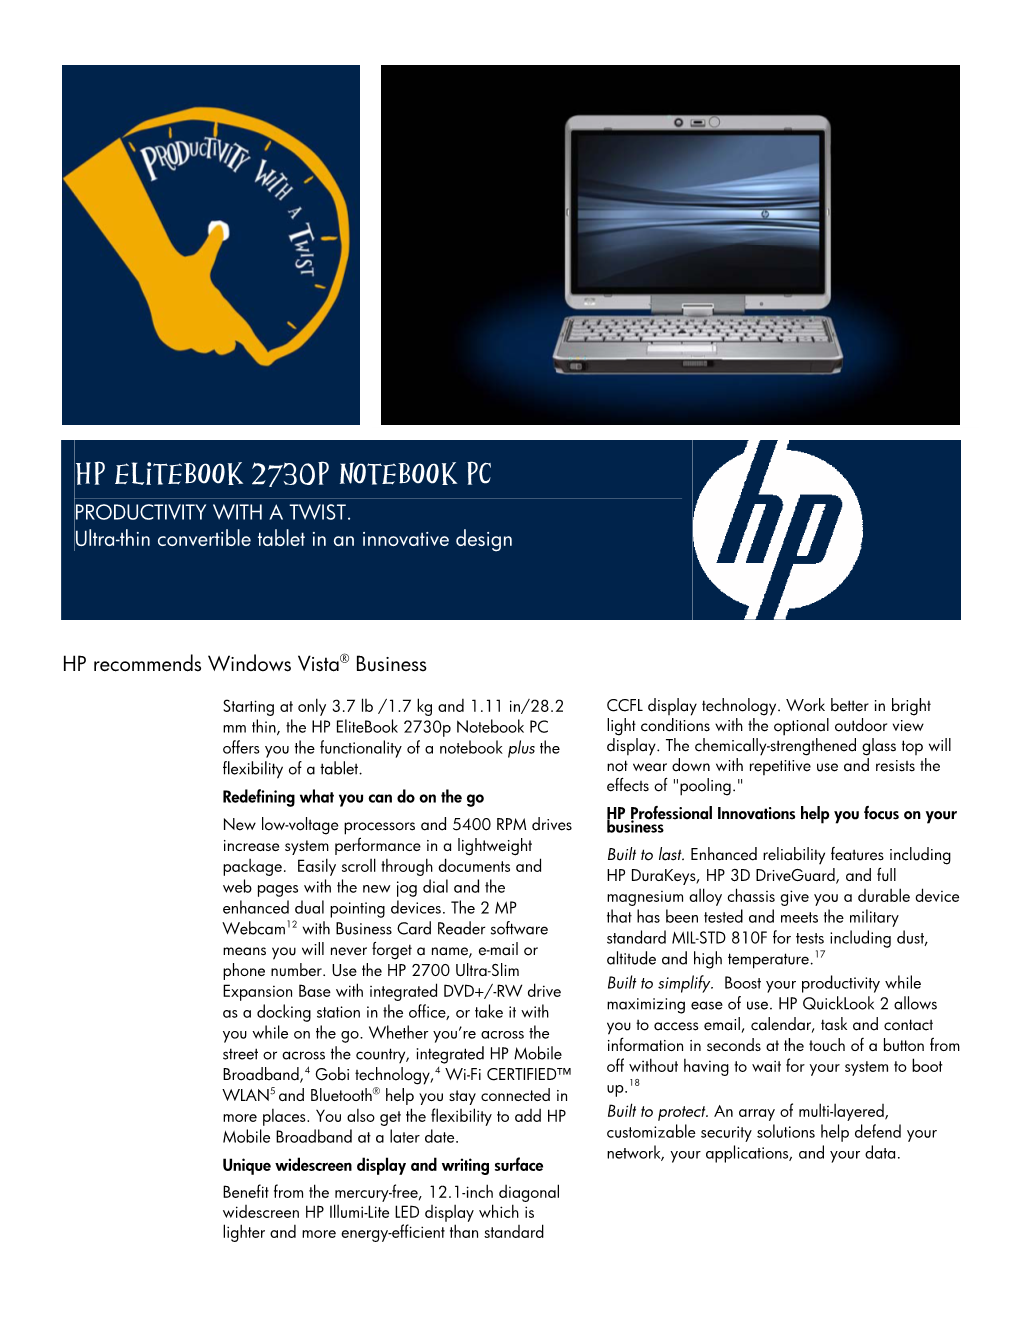 HP Elitebook 2730P Notebook PC